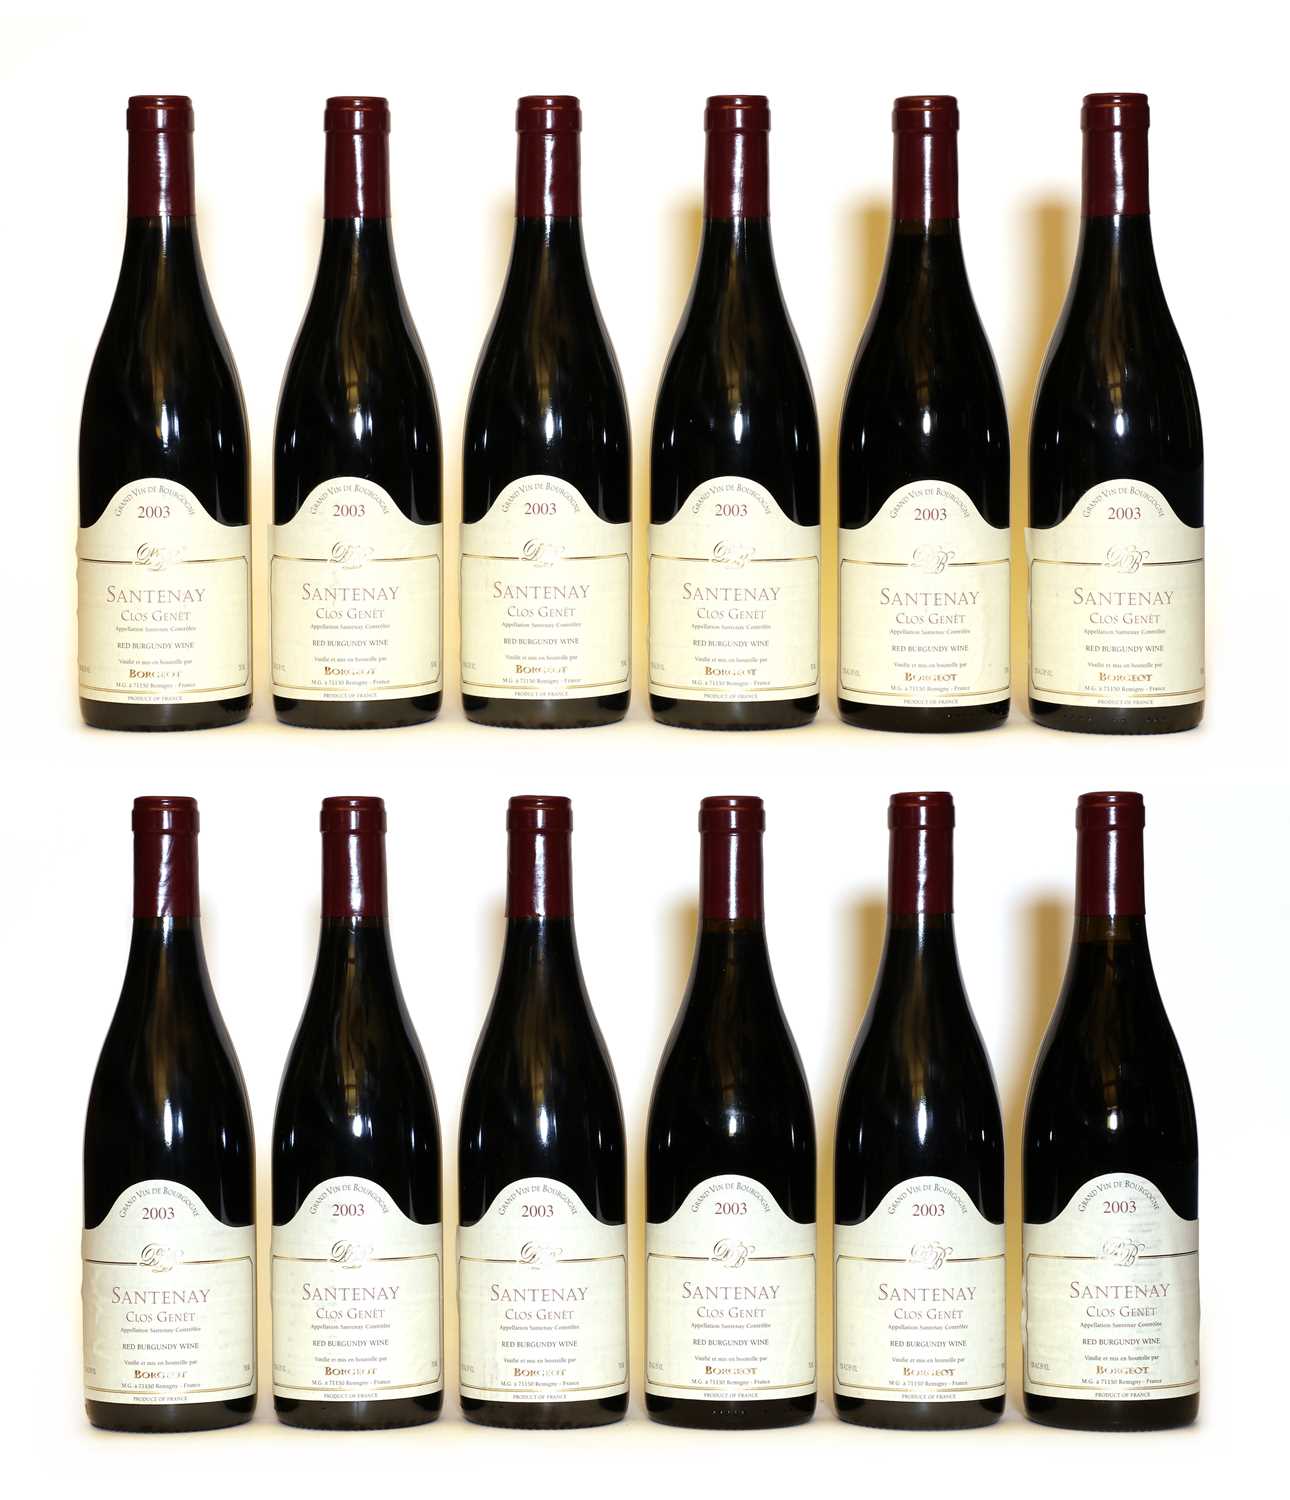 Lot 49 - Santenay, 1er Cru, Clos Genet, Domaine Borgeot, 2003, twelve bottles (boxed)